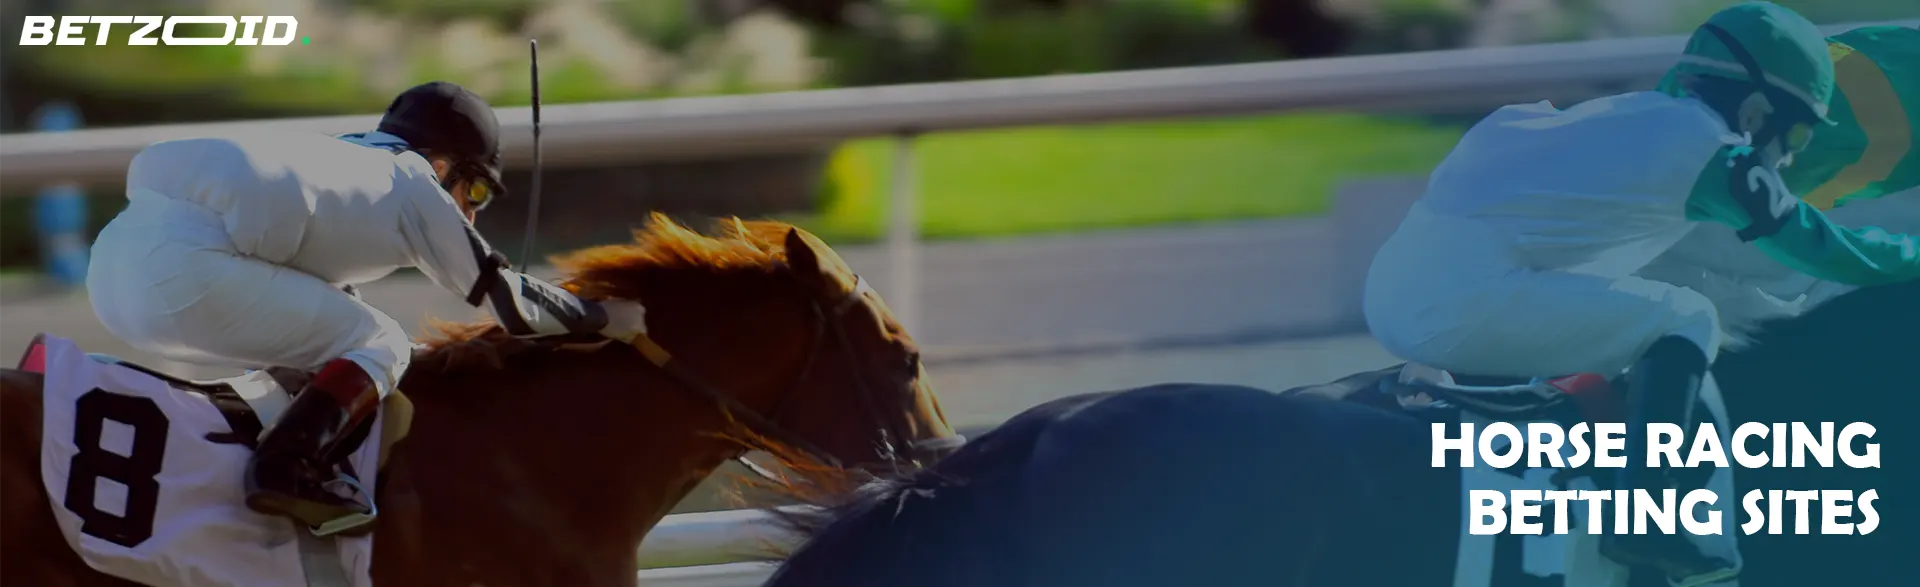 Jockeys racing on horses, highlighting online horse betting in Canada.